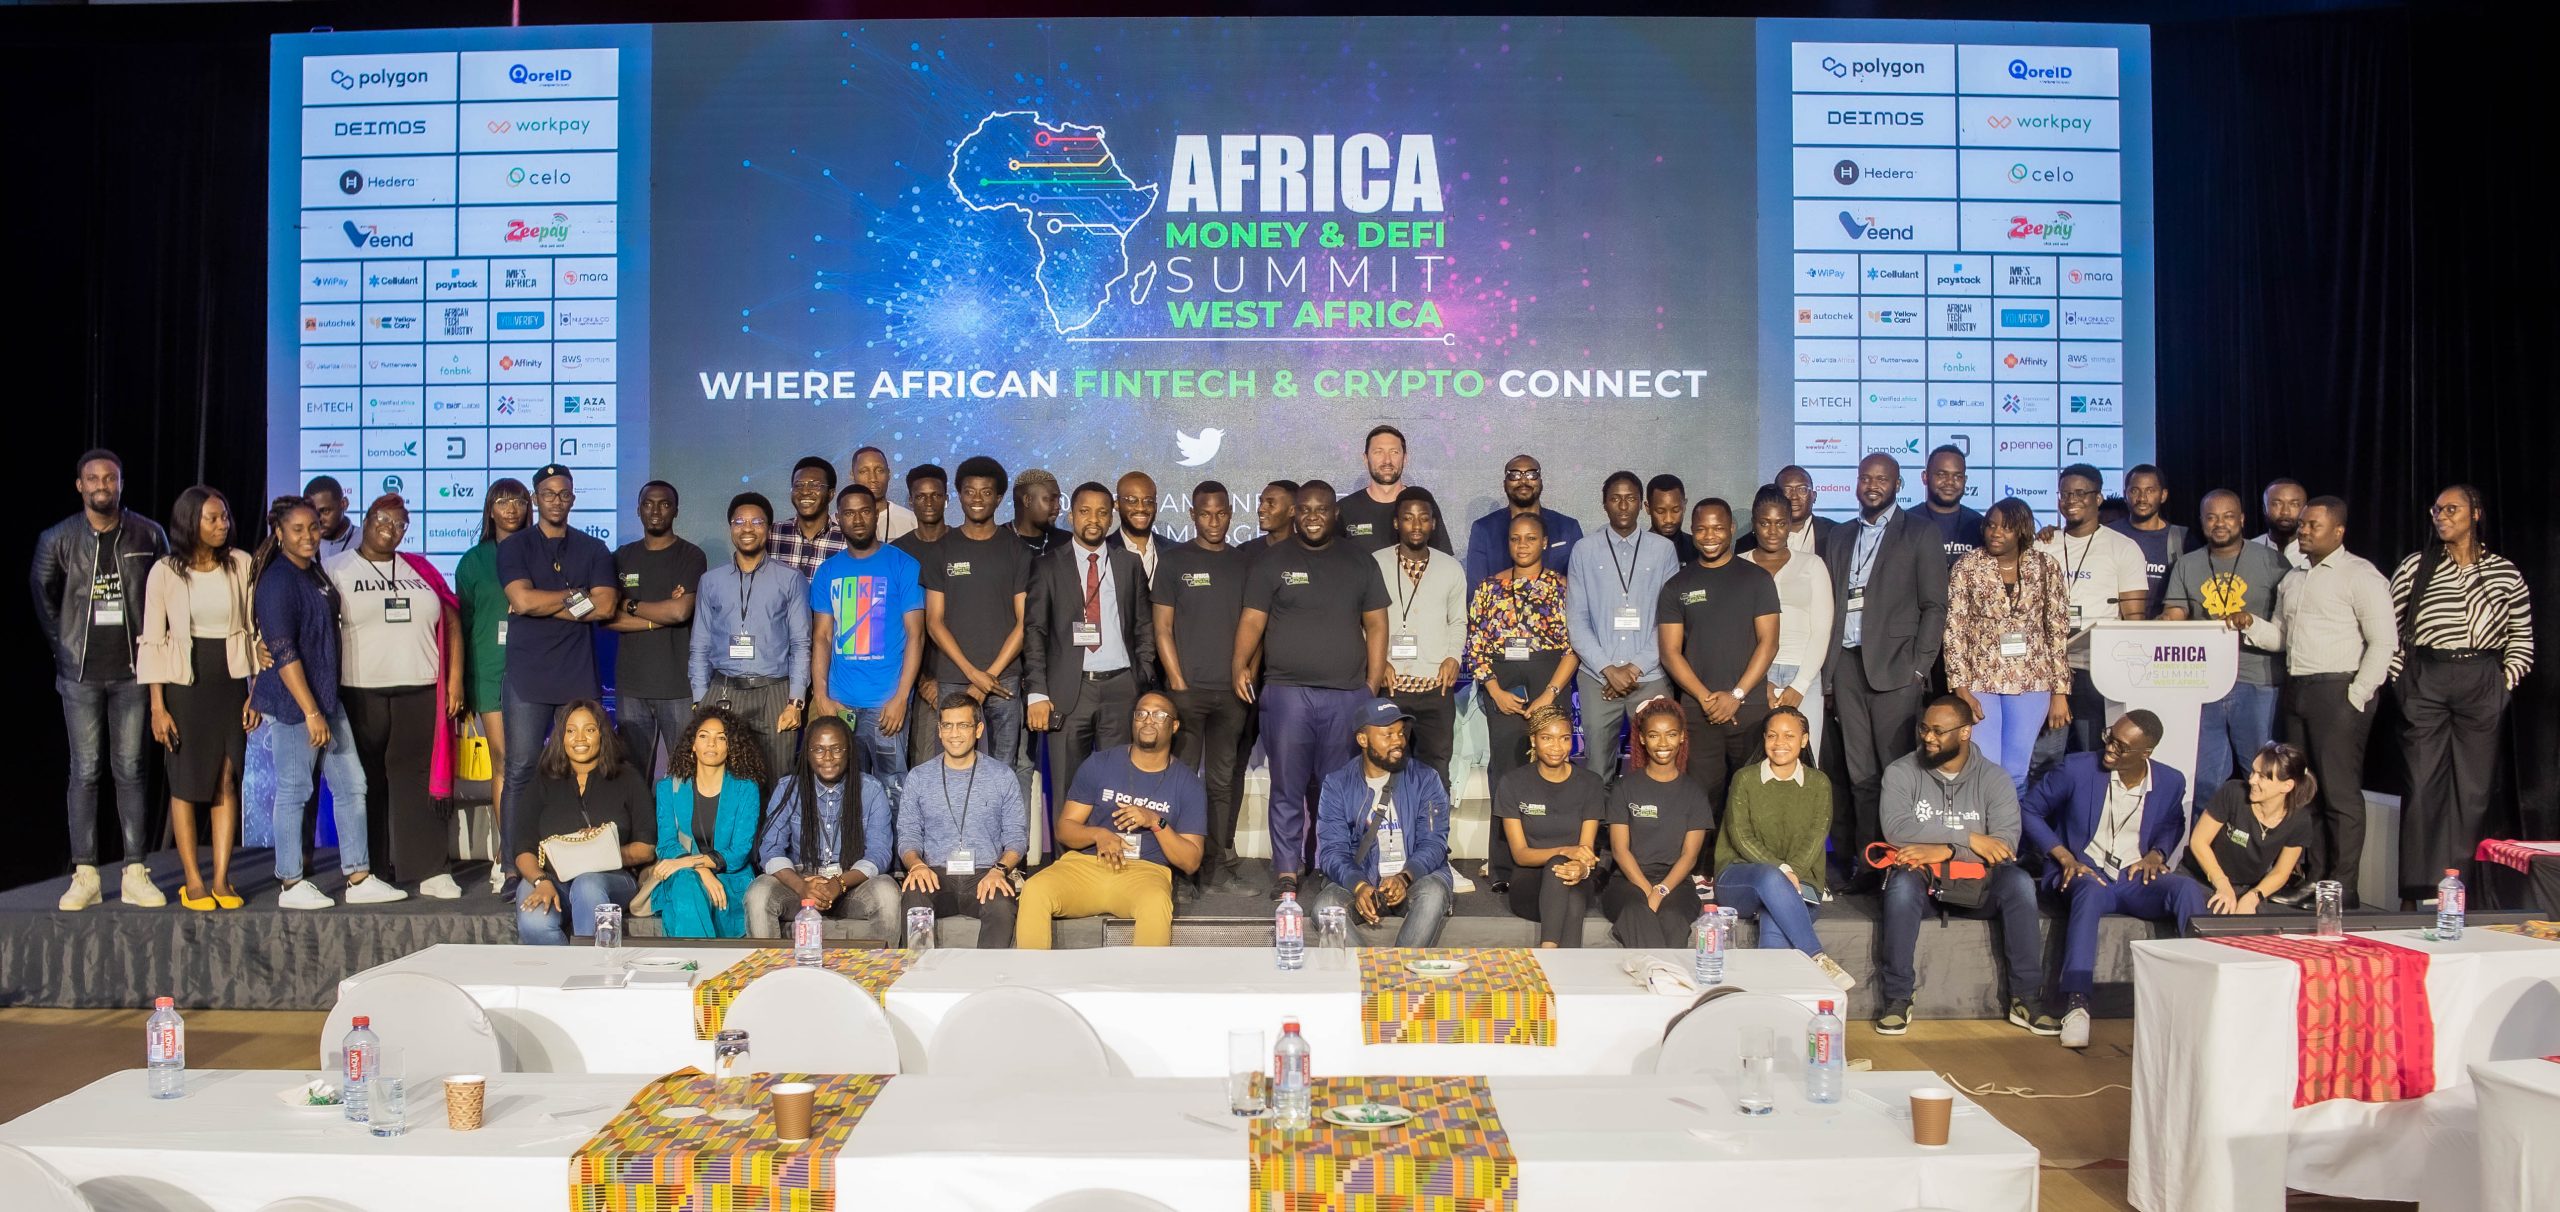 Africa Money & DeFi Summit image